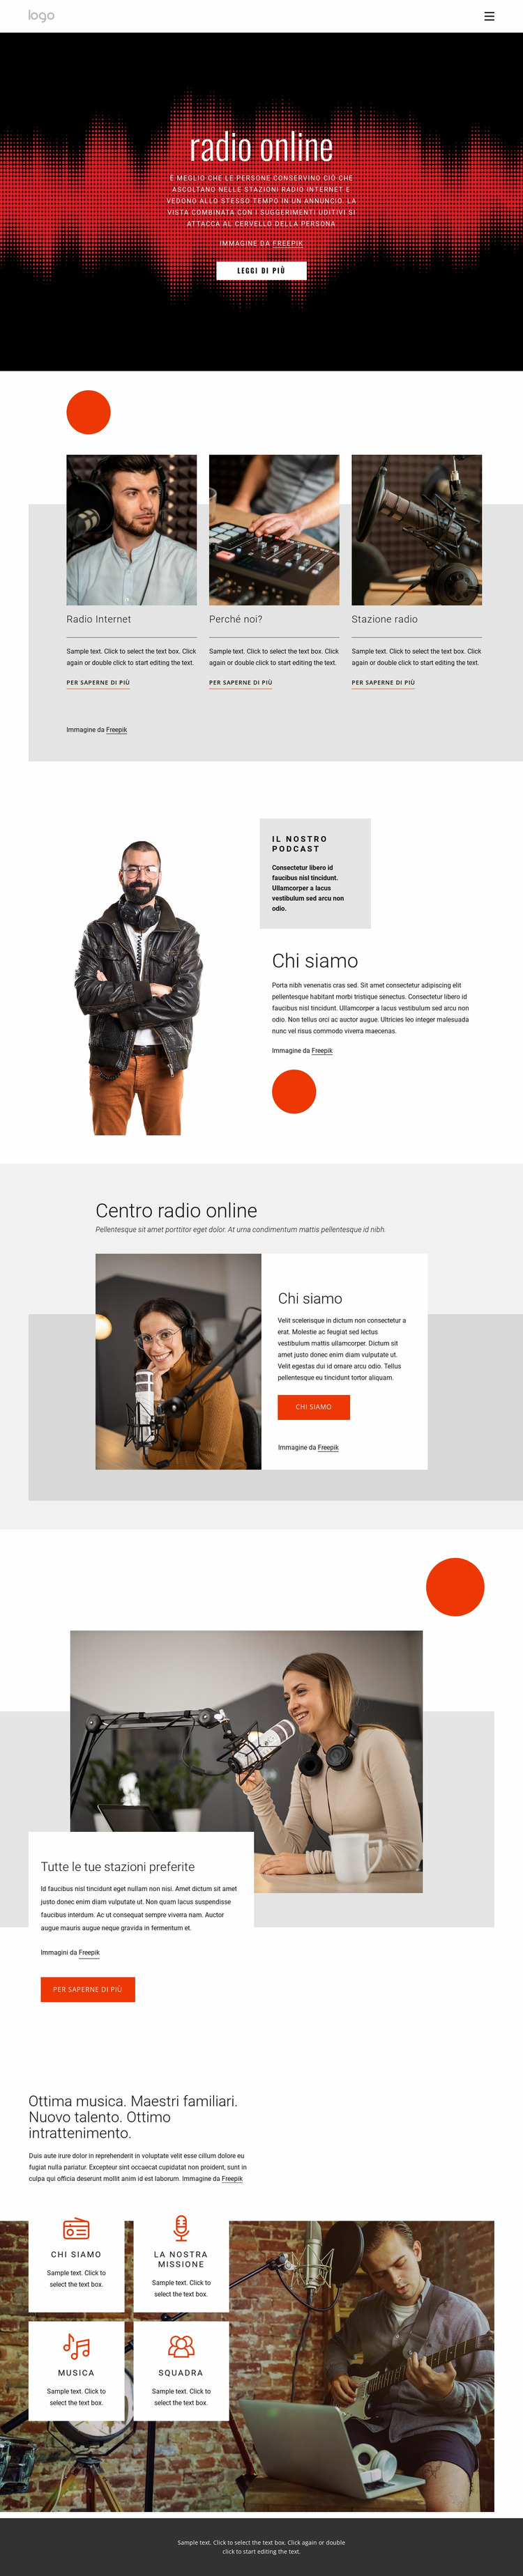 Programmi radiofonici in linea Modello Joomla